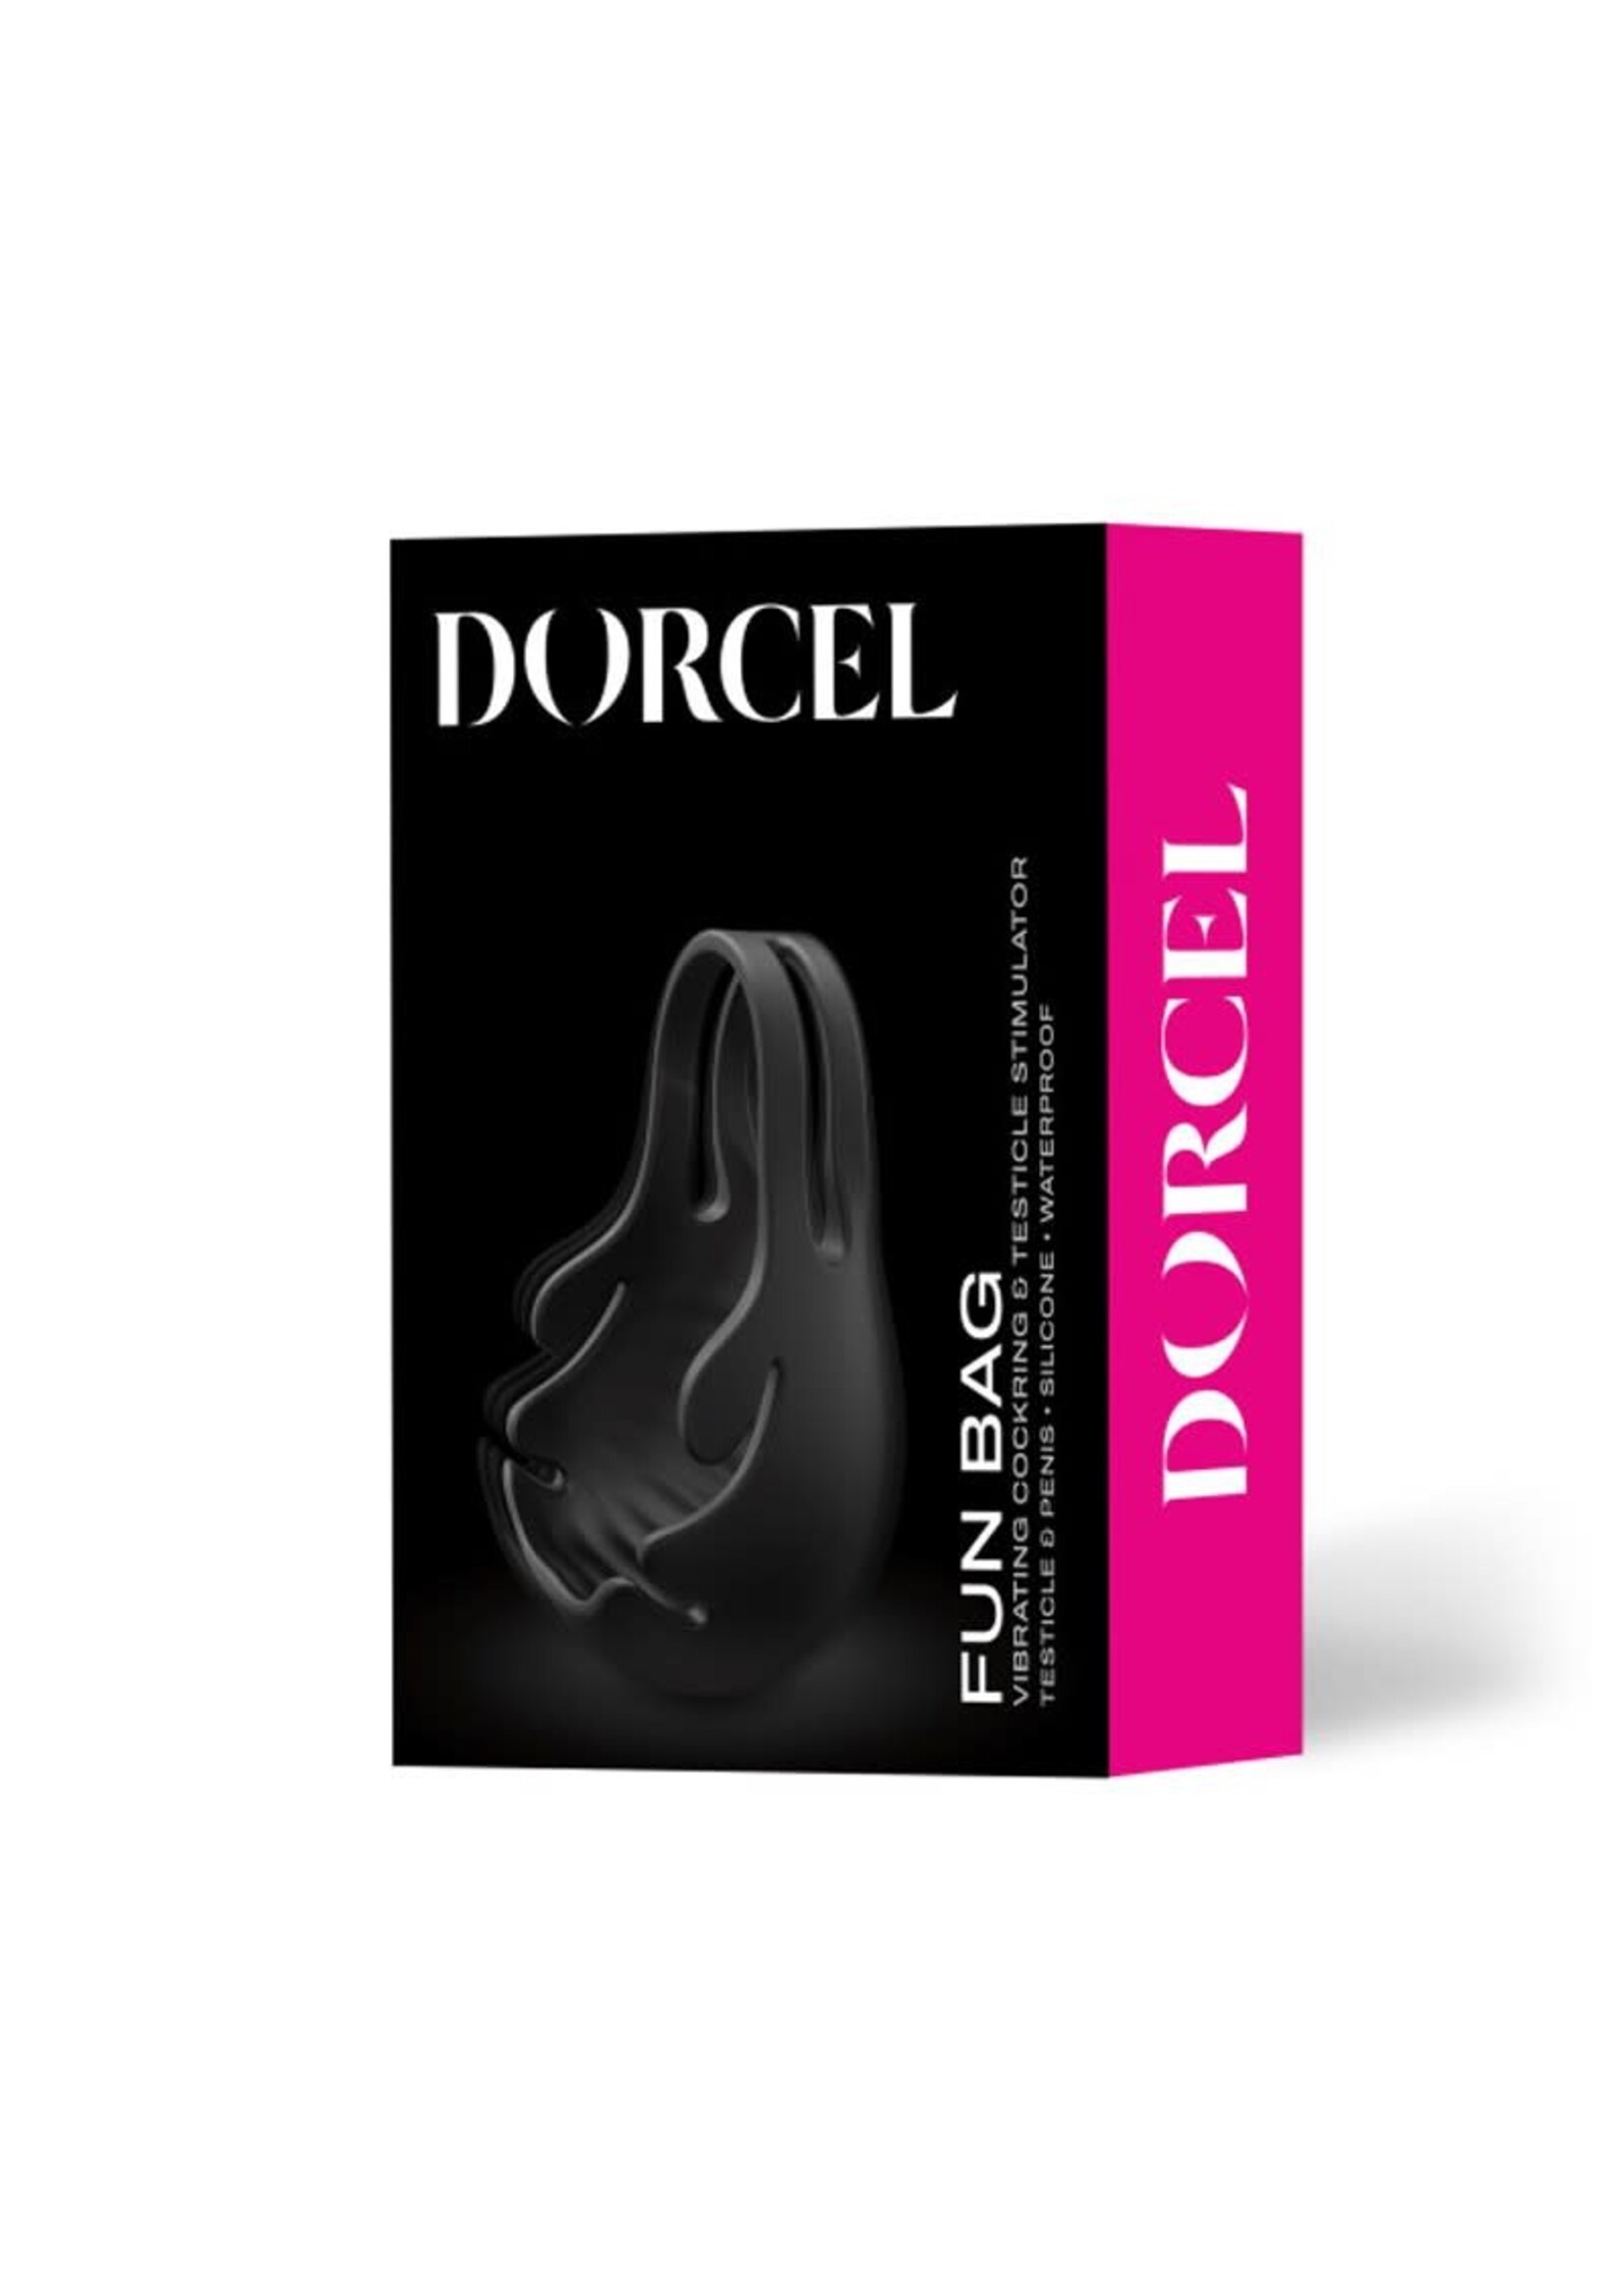 Dorcel Fun bag - vibrating cock ring and testicle stimulator